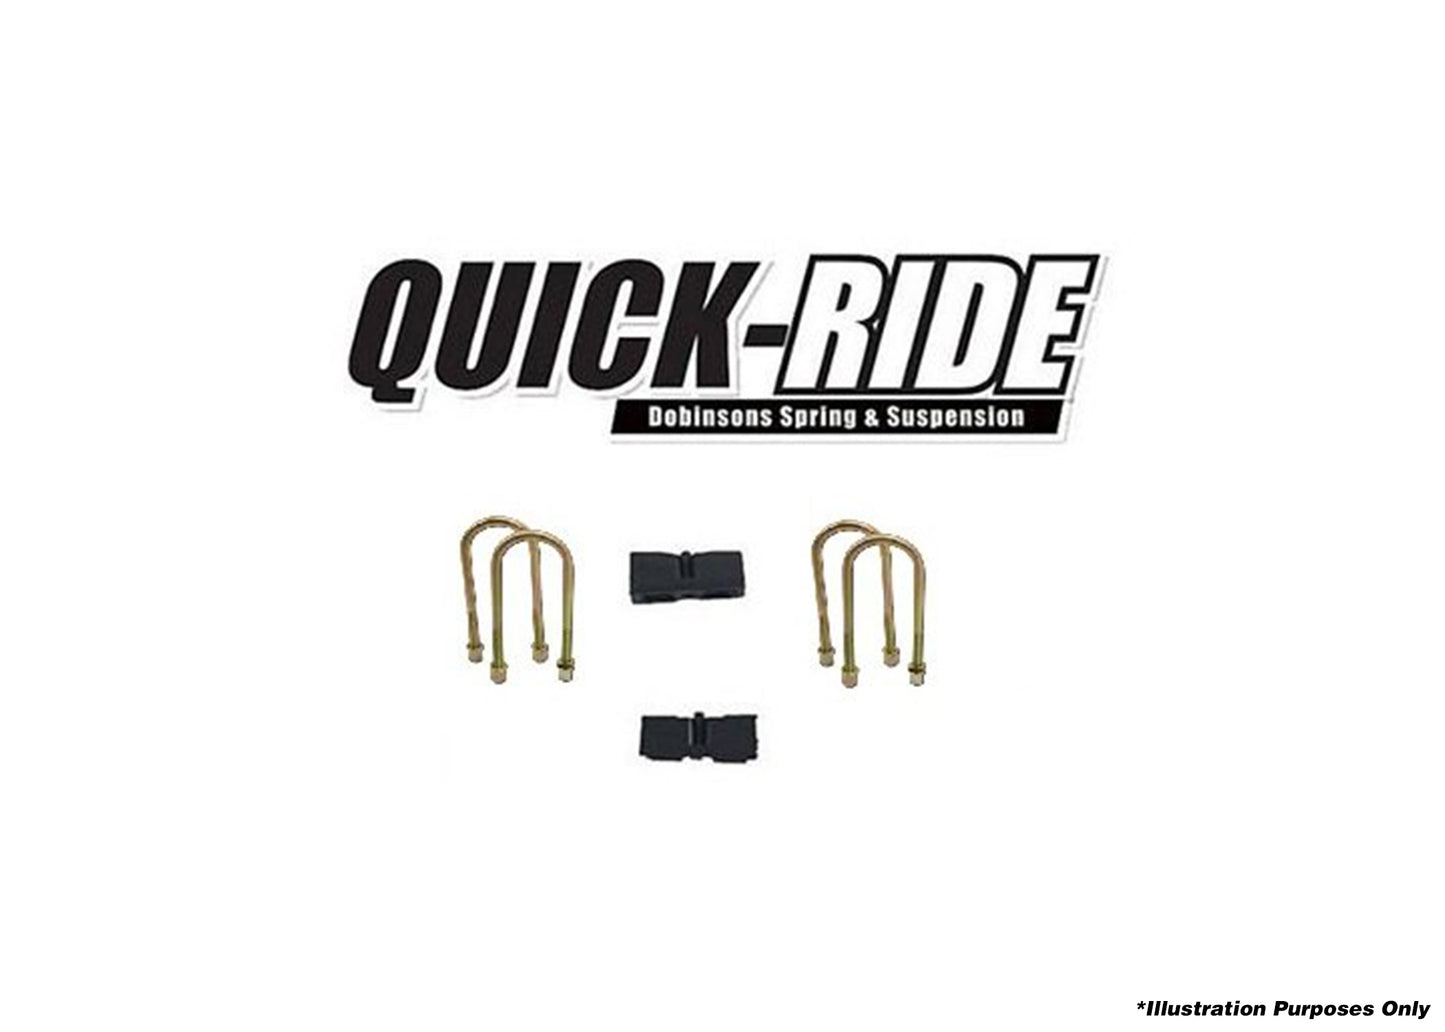 Dobinsons 2" Rear Lift Quick Ride Kit (QR19-502K) - QR19-502K